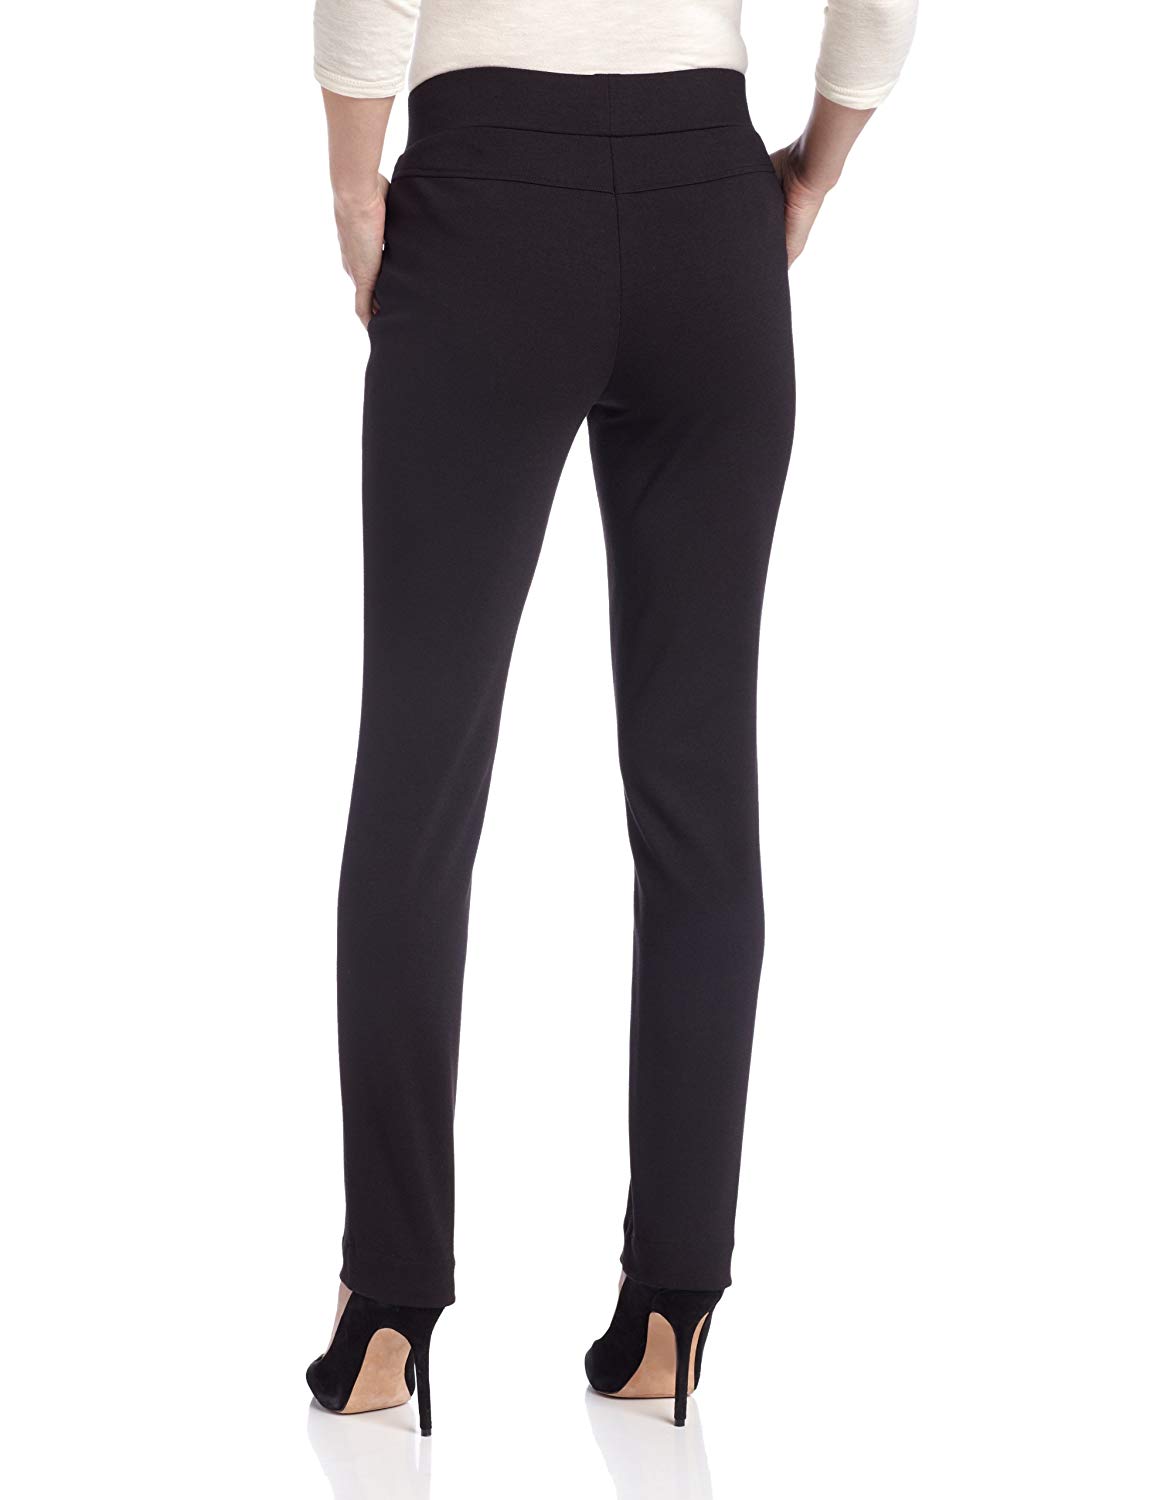 Rafaella Women's Ponte Comfort Slim Leg Pant, Black, 14, Black, Size 14 ...